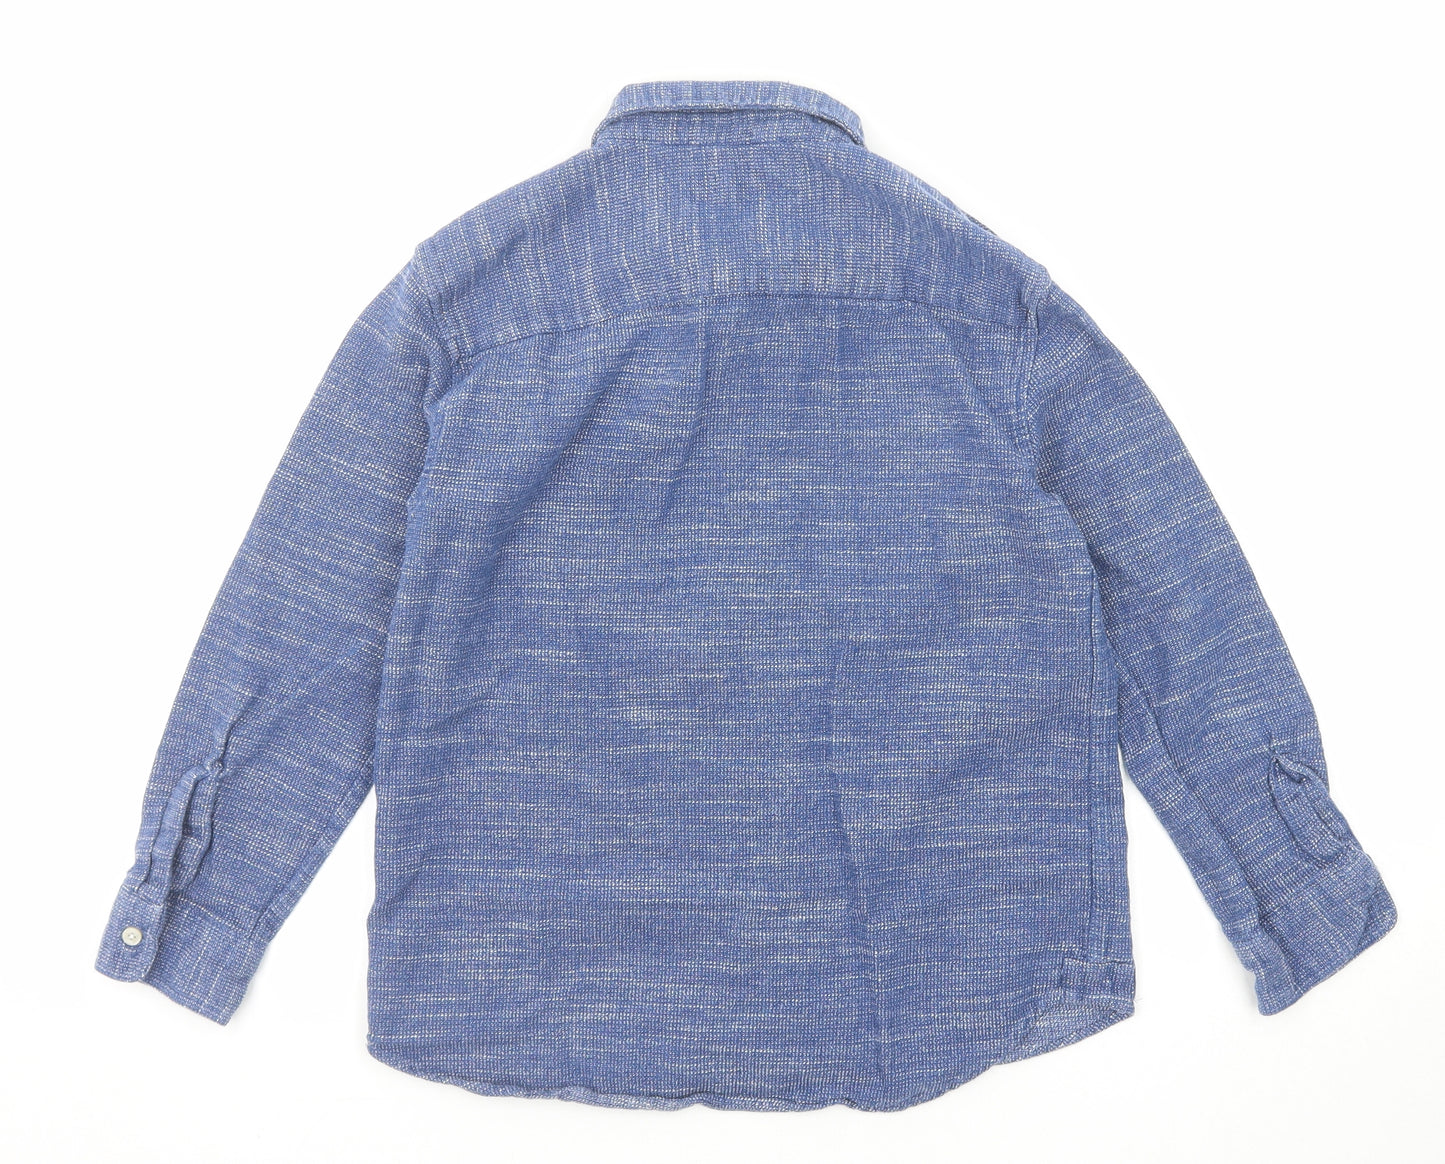 Zara Boys Blue Cotton Basic Button-Up Size 10 Years Collared Button